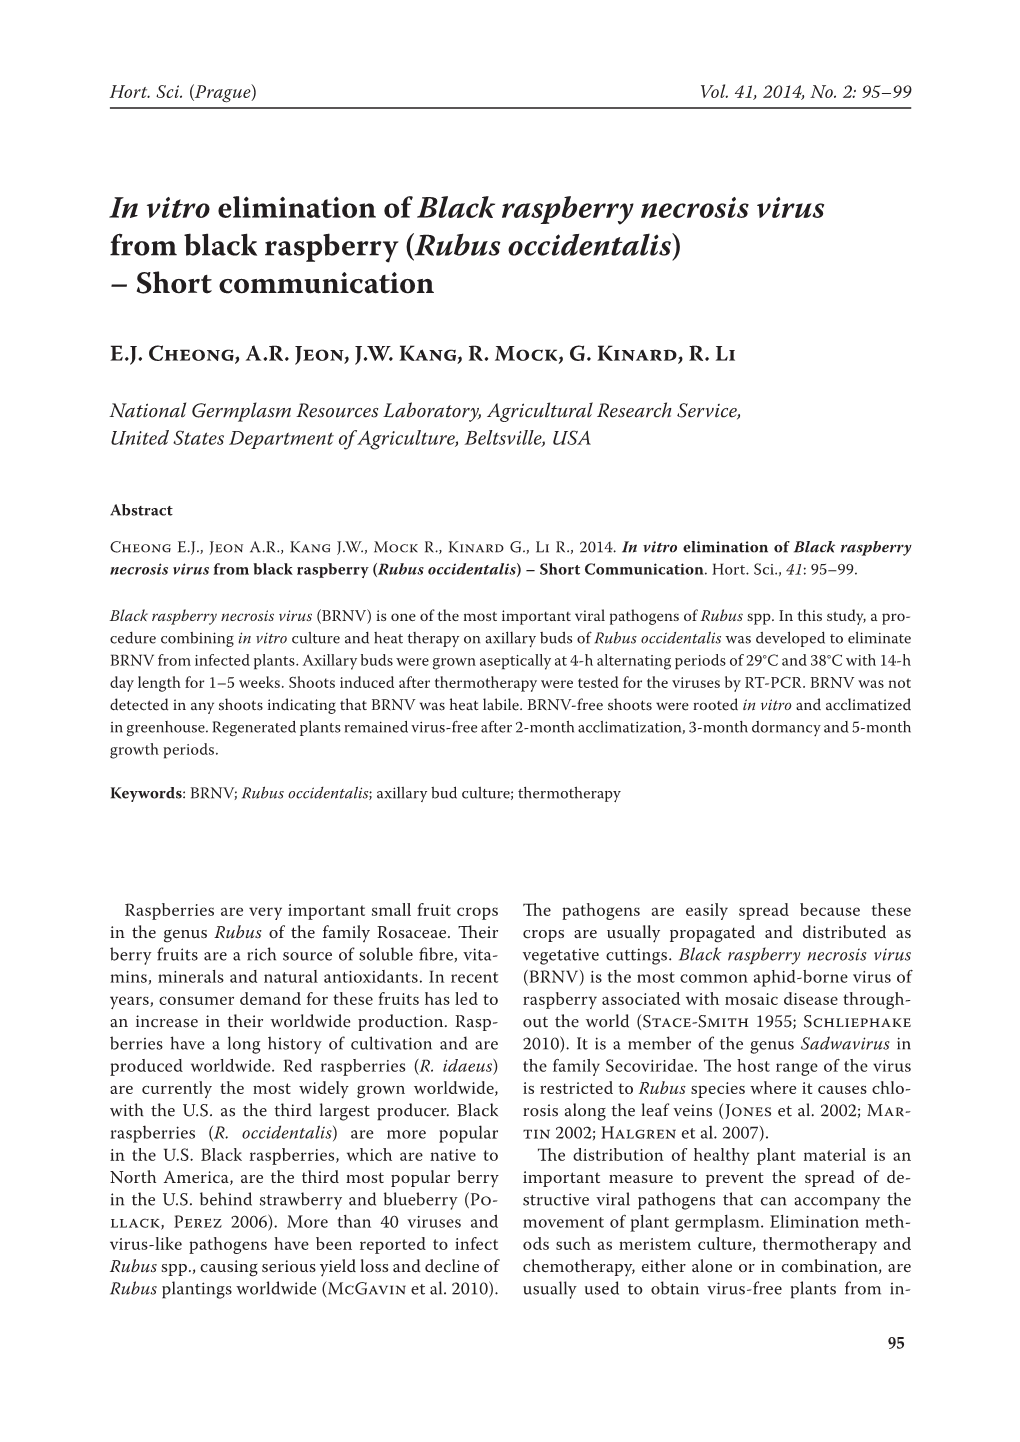 In Vitro Elimination of Black Raspberry Necrosis Virus from Black Raspberry (Rubus Occidentalis) – Short Communication